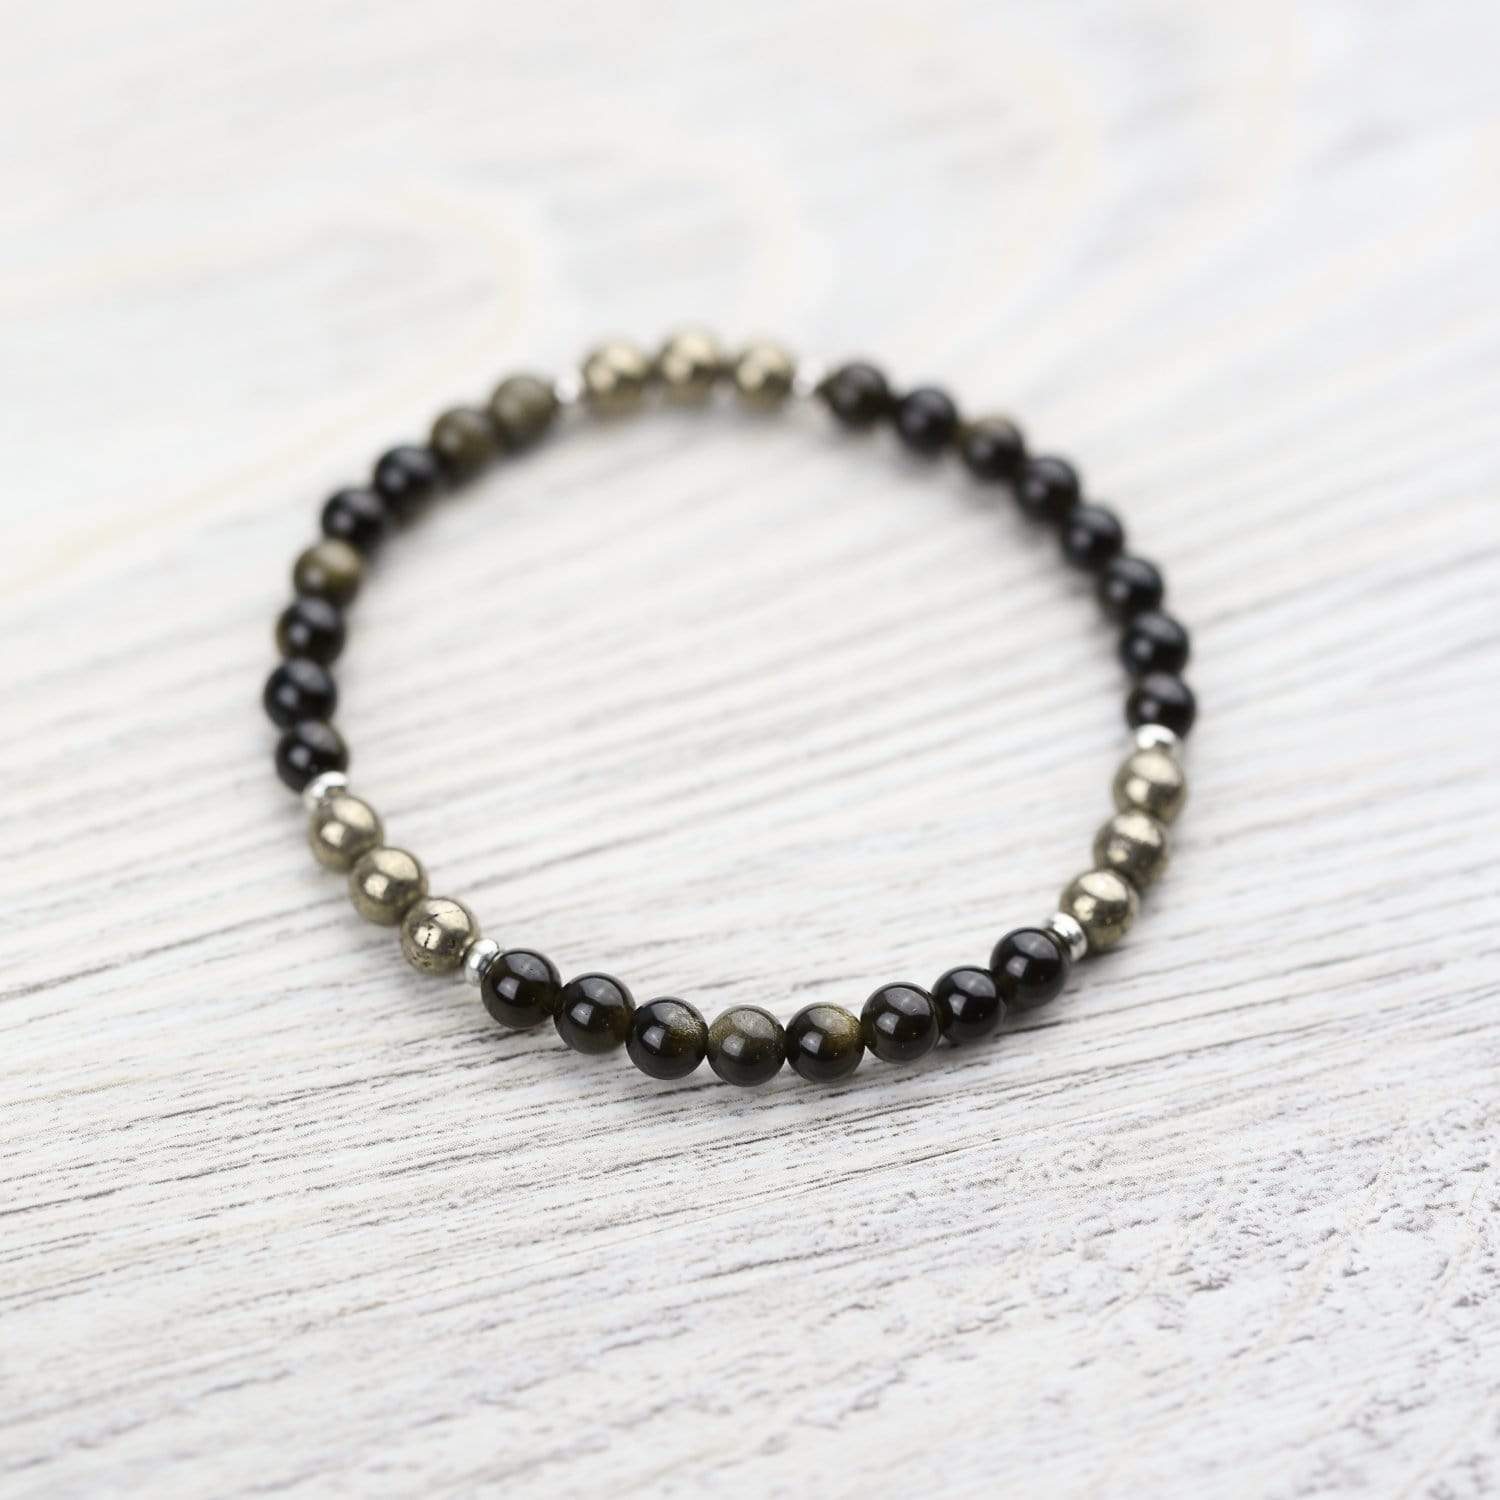 Natural Black Obsidian Stone Feng Shui Pixiu Wealth Bracelet – Aum Chakra